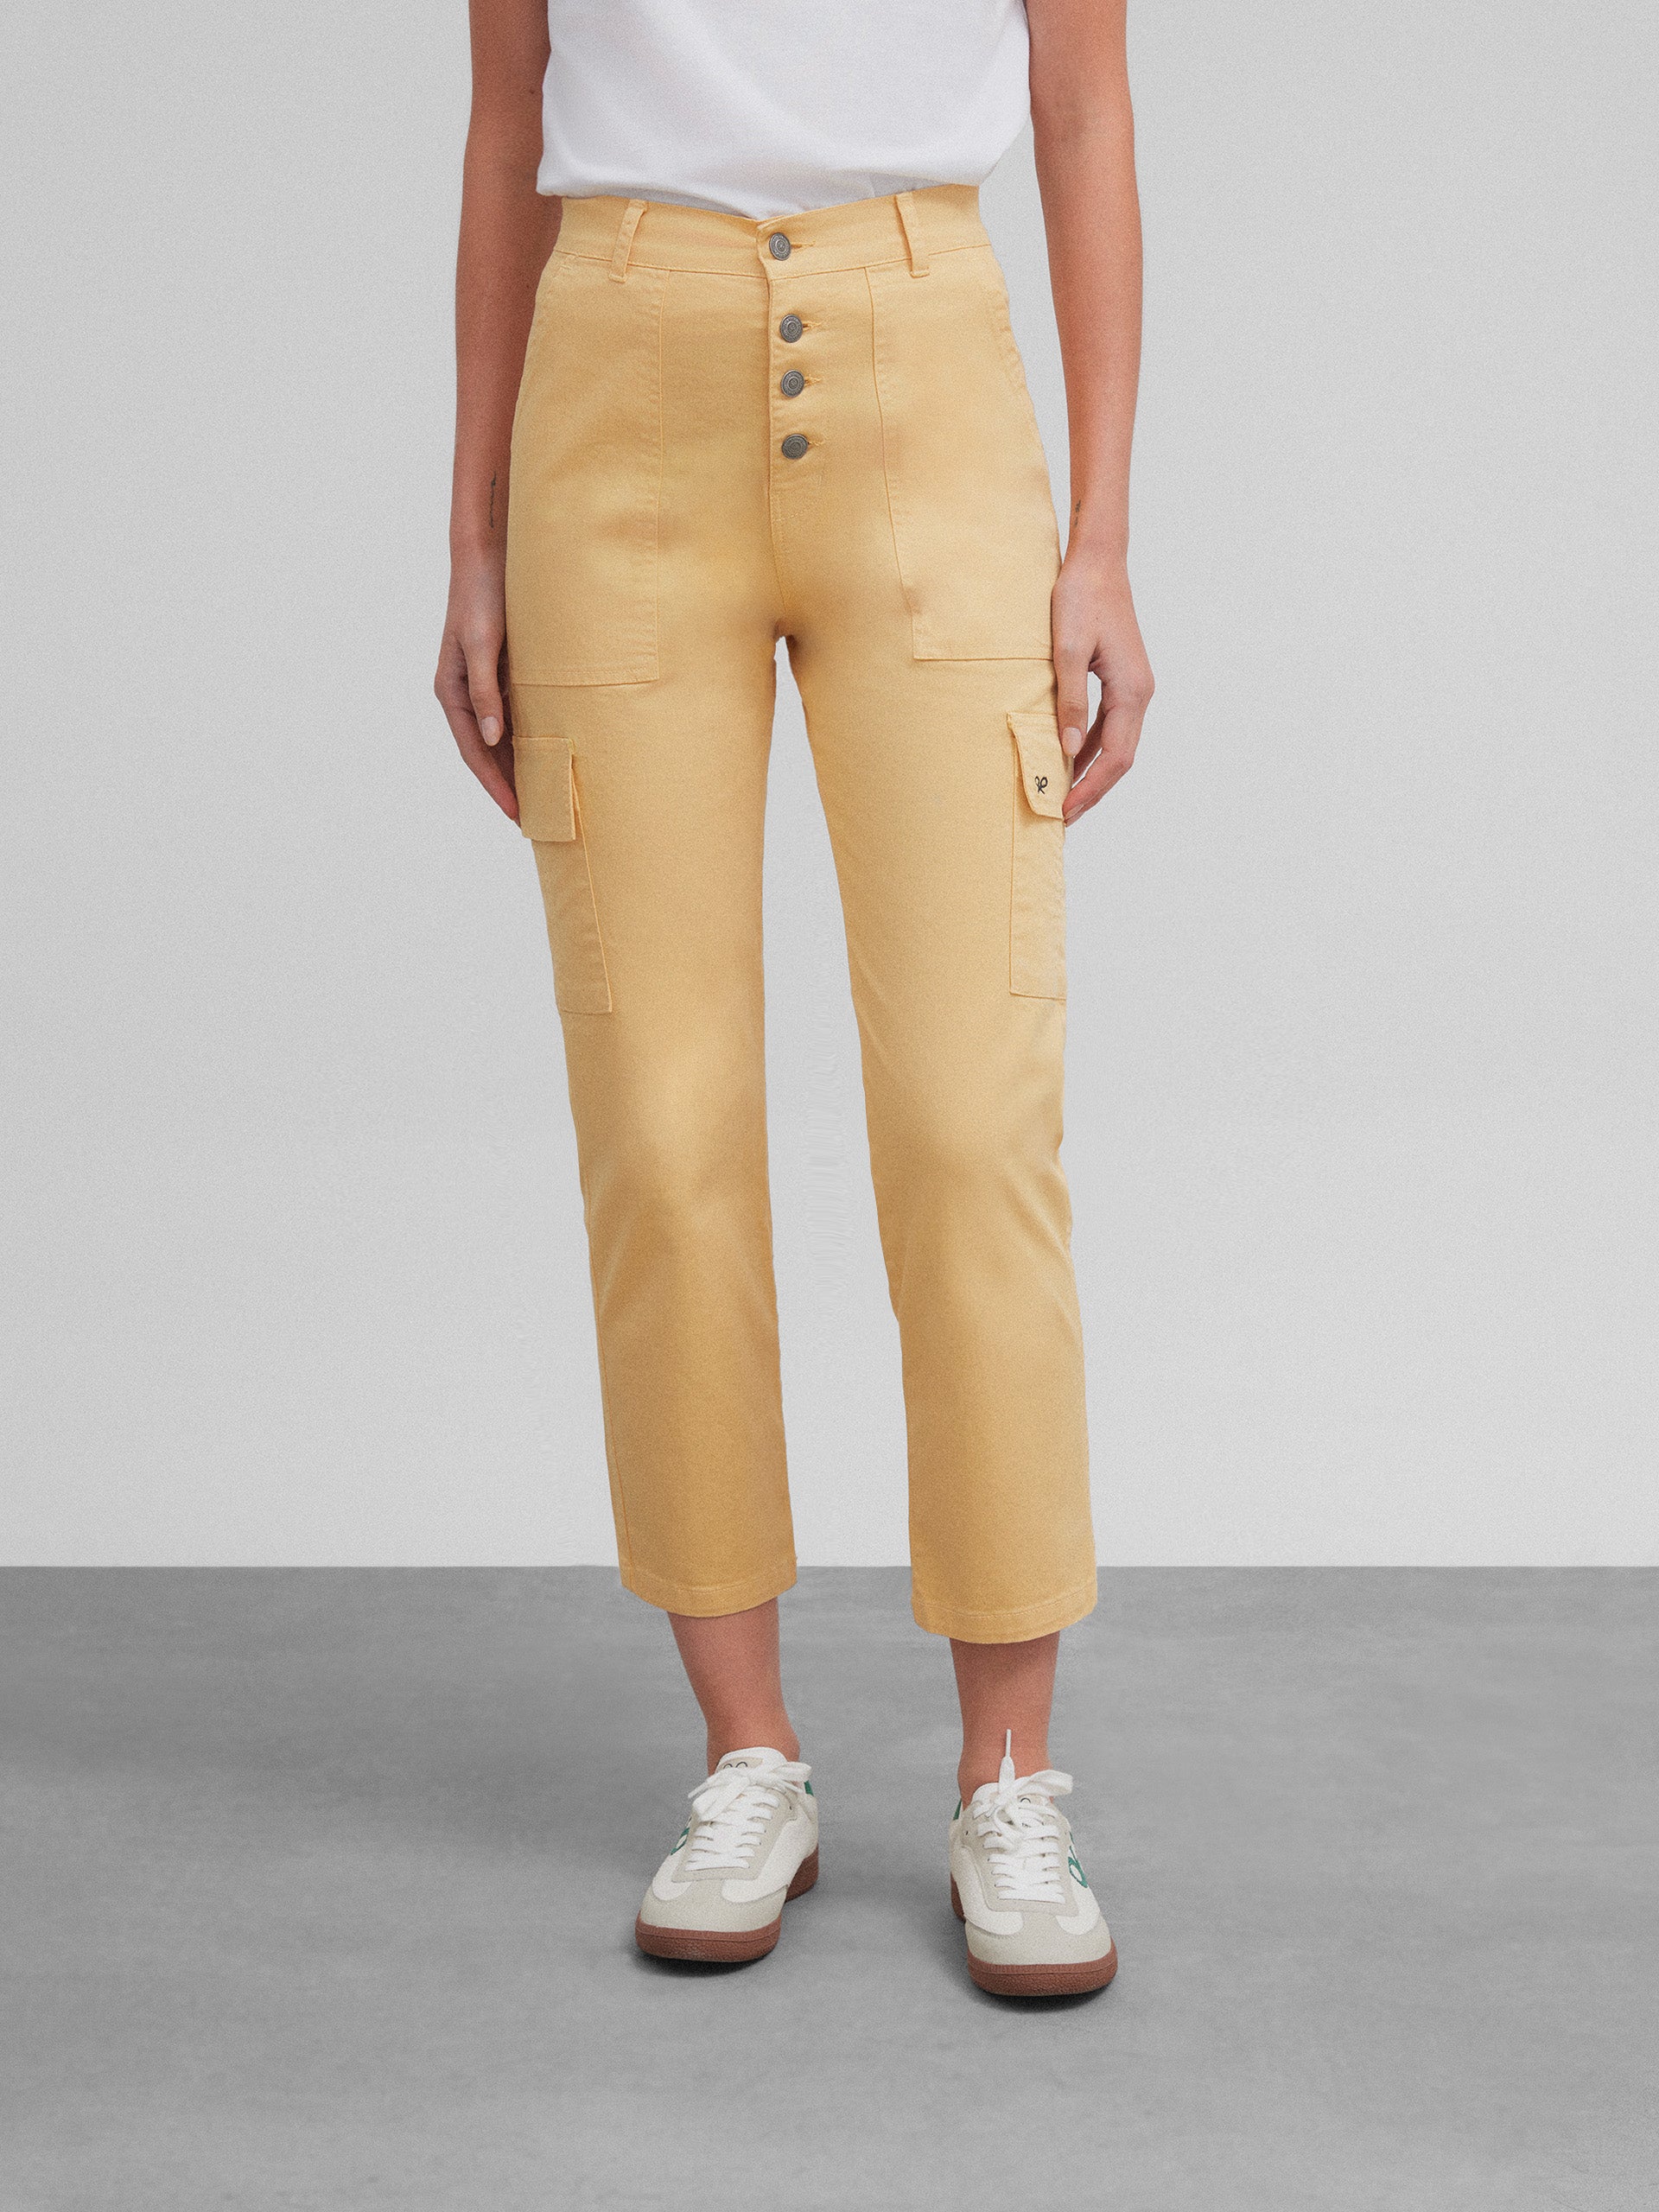 Pantalon femme cargo jaune en jean